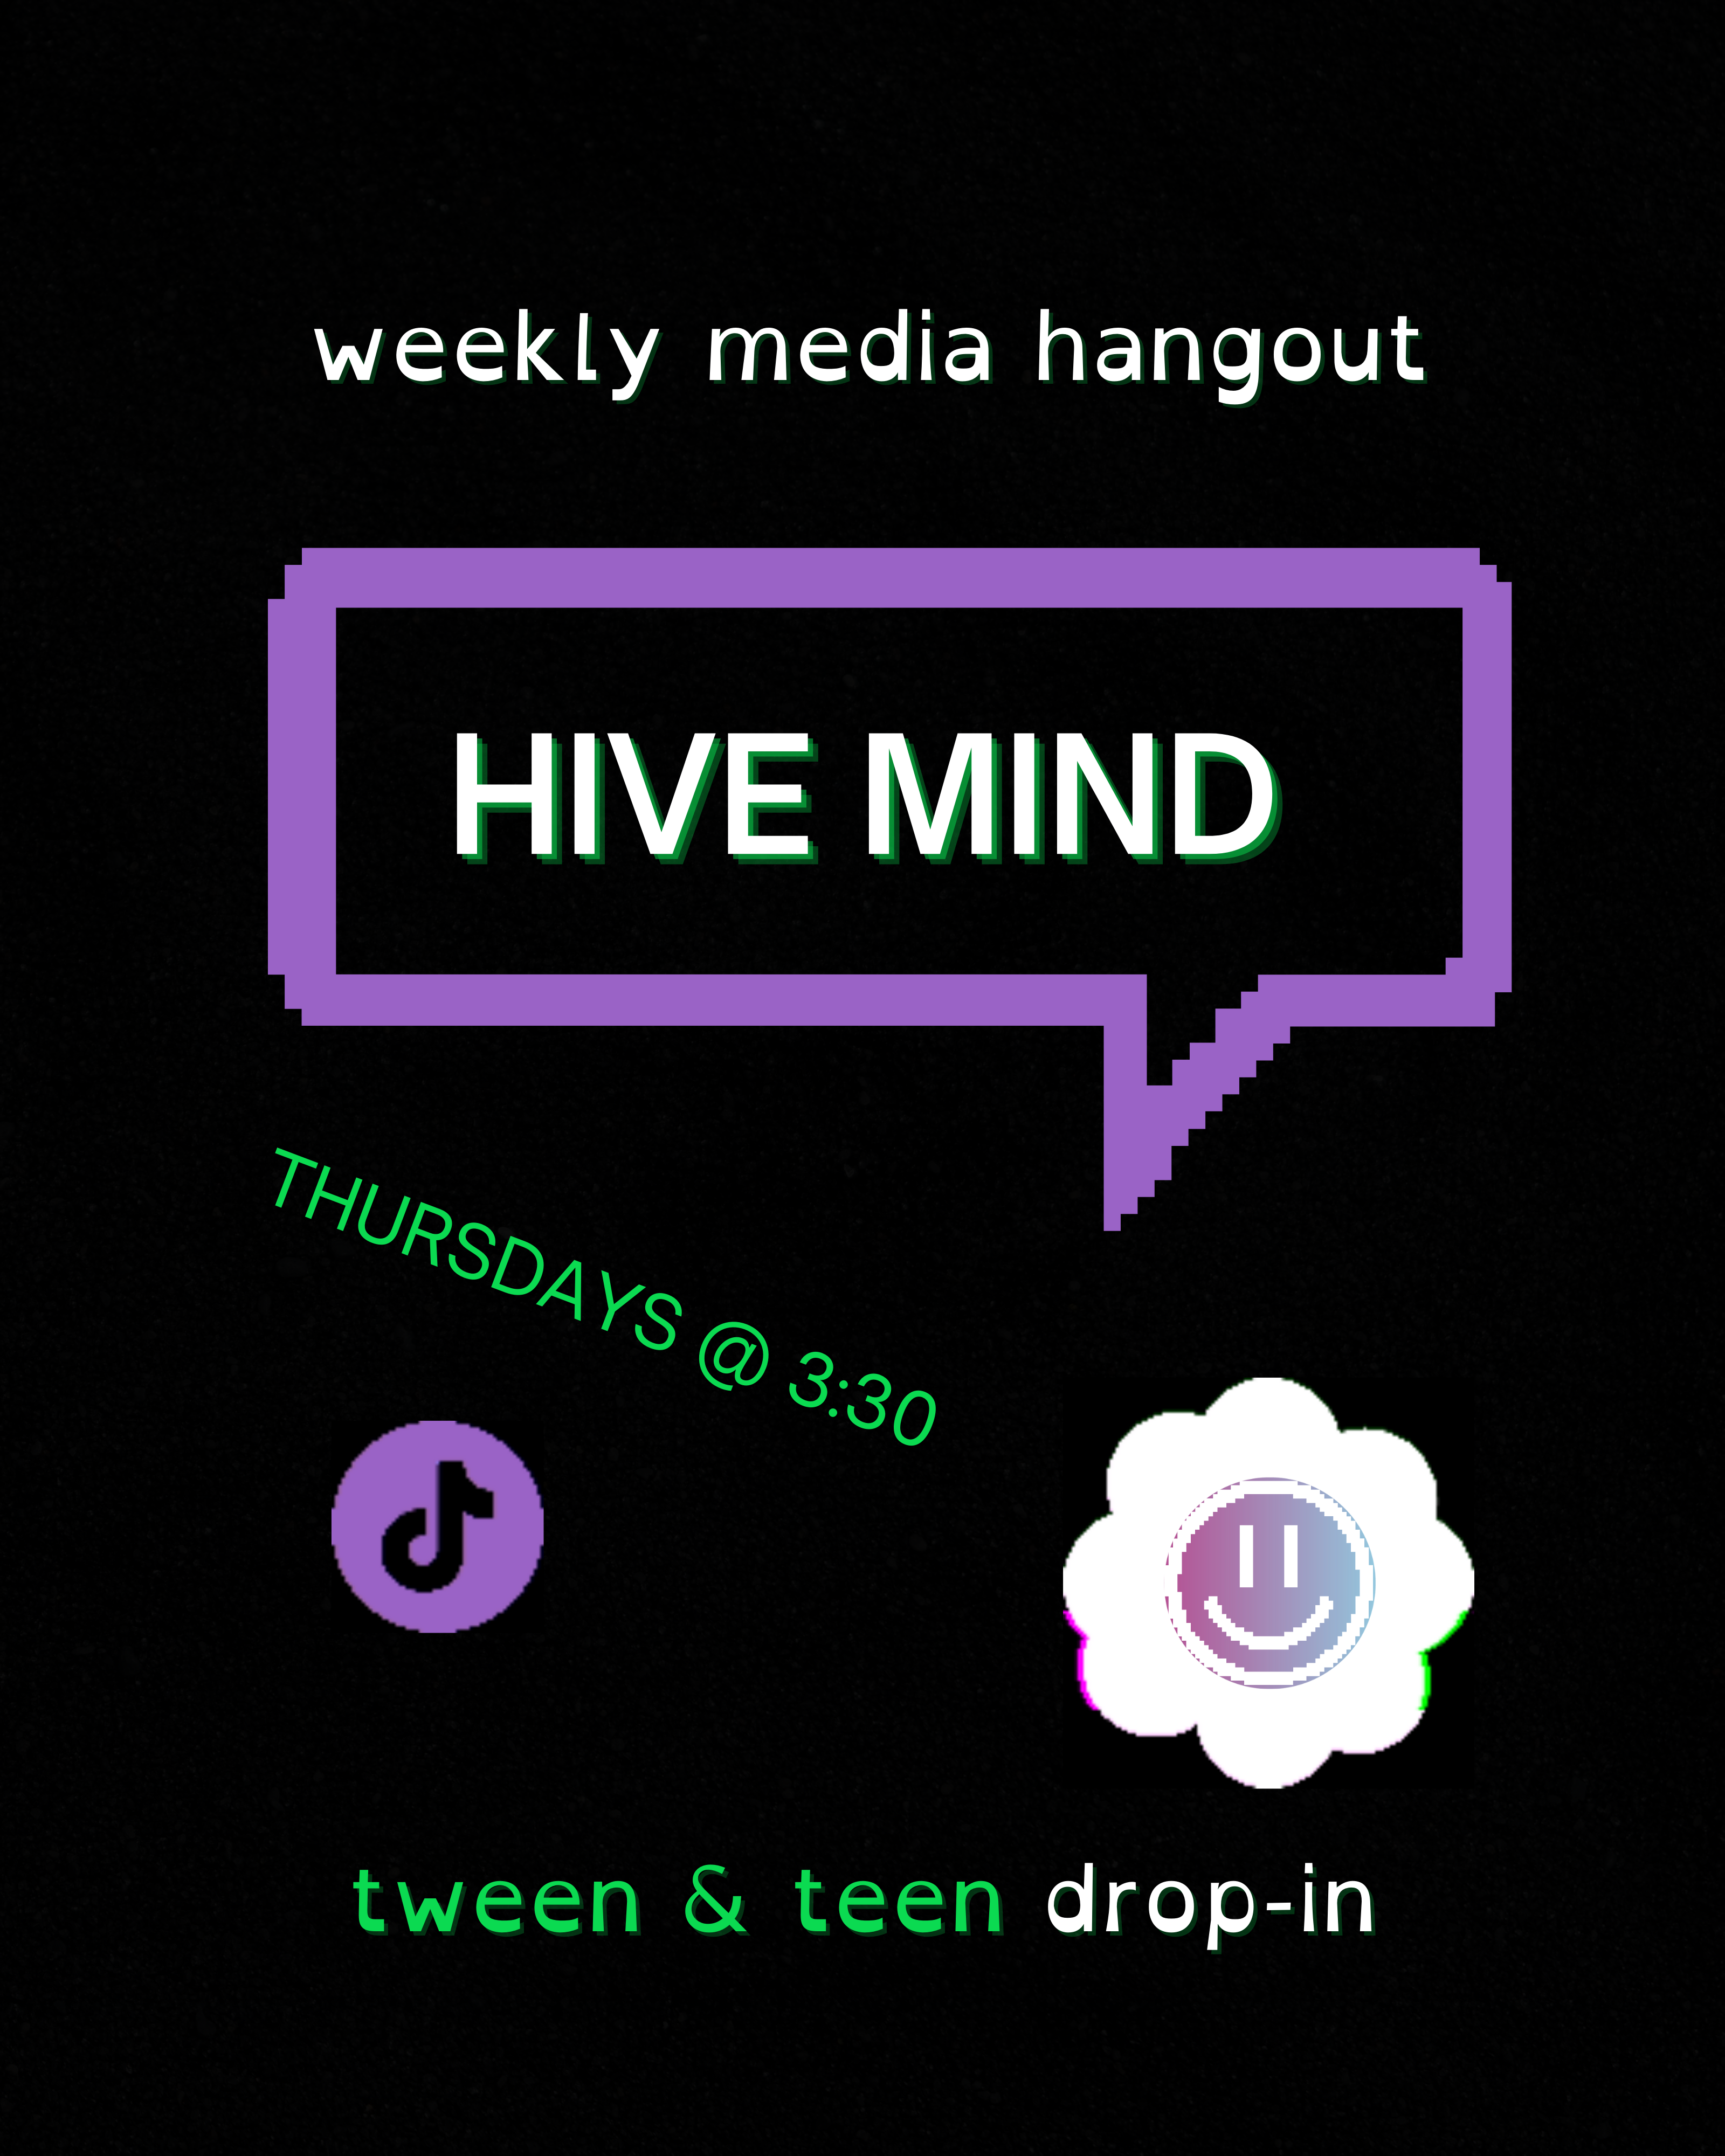 Hive Mind weekly media hangout Thursdays 3:30 tween & teen drop-in -- link to details